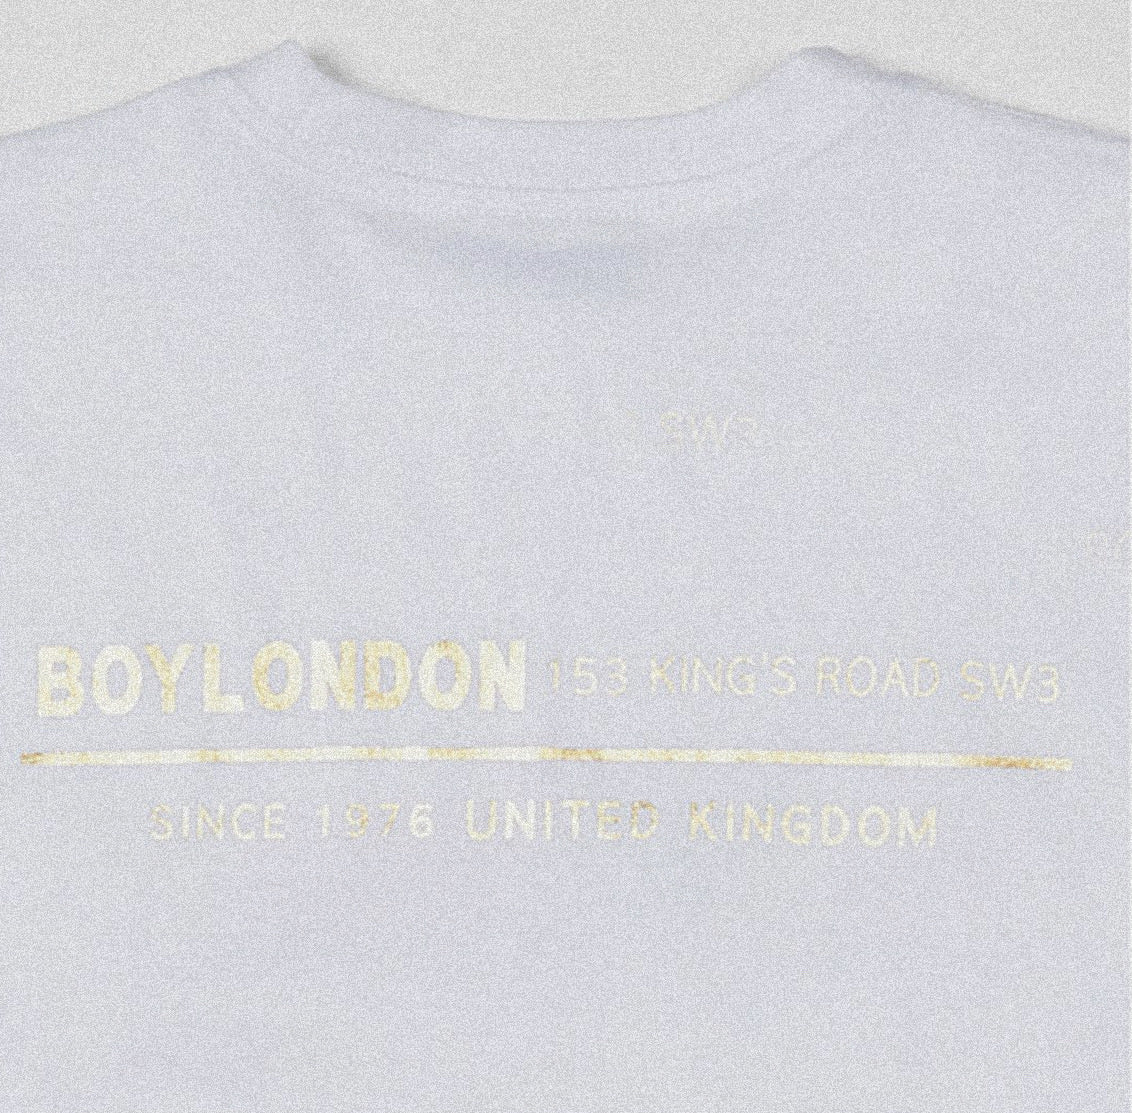 BOY LONDON Digital Gradation White